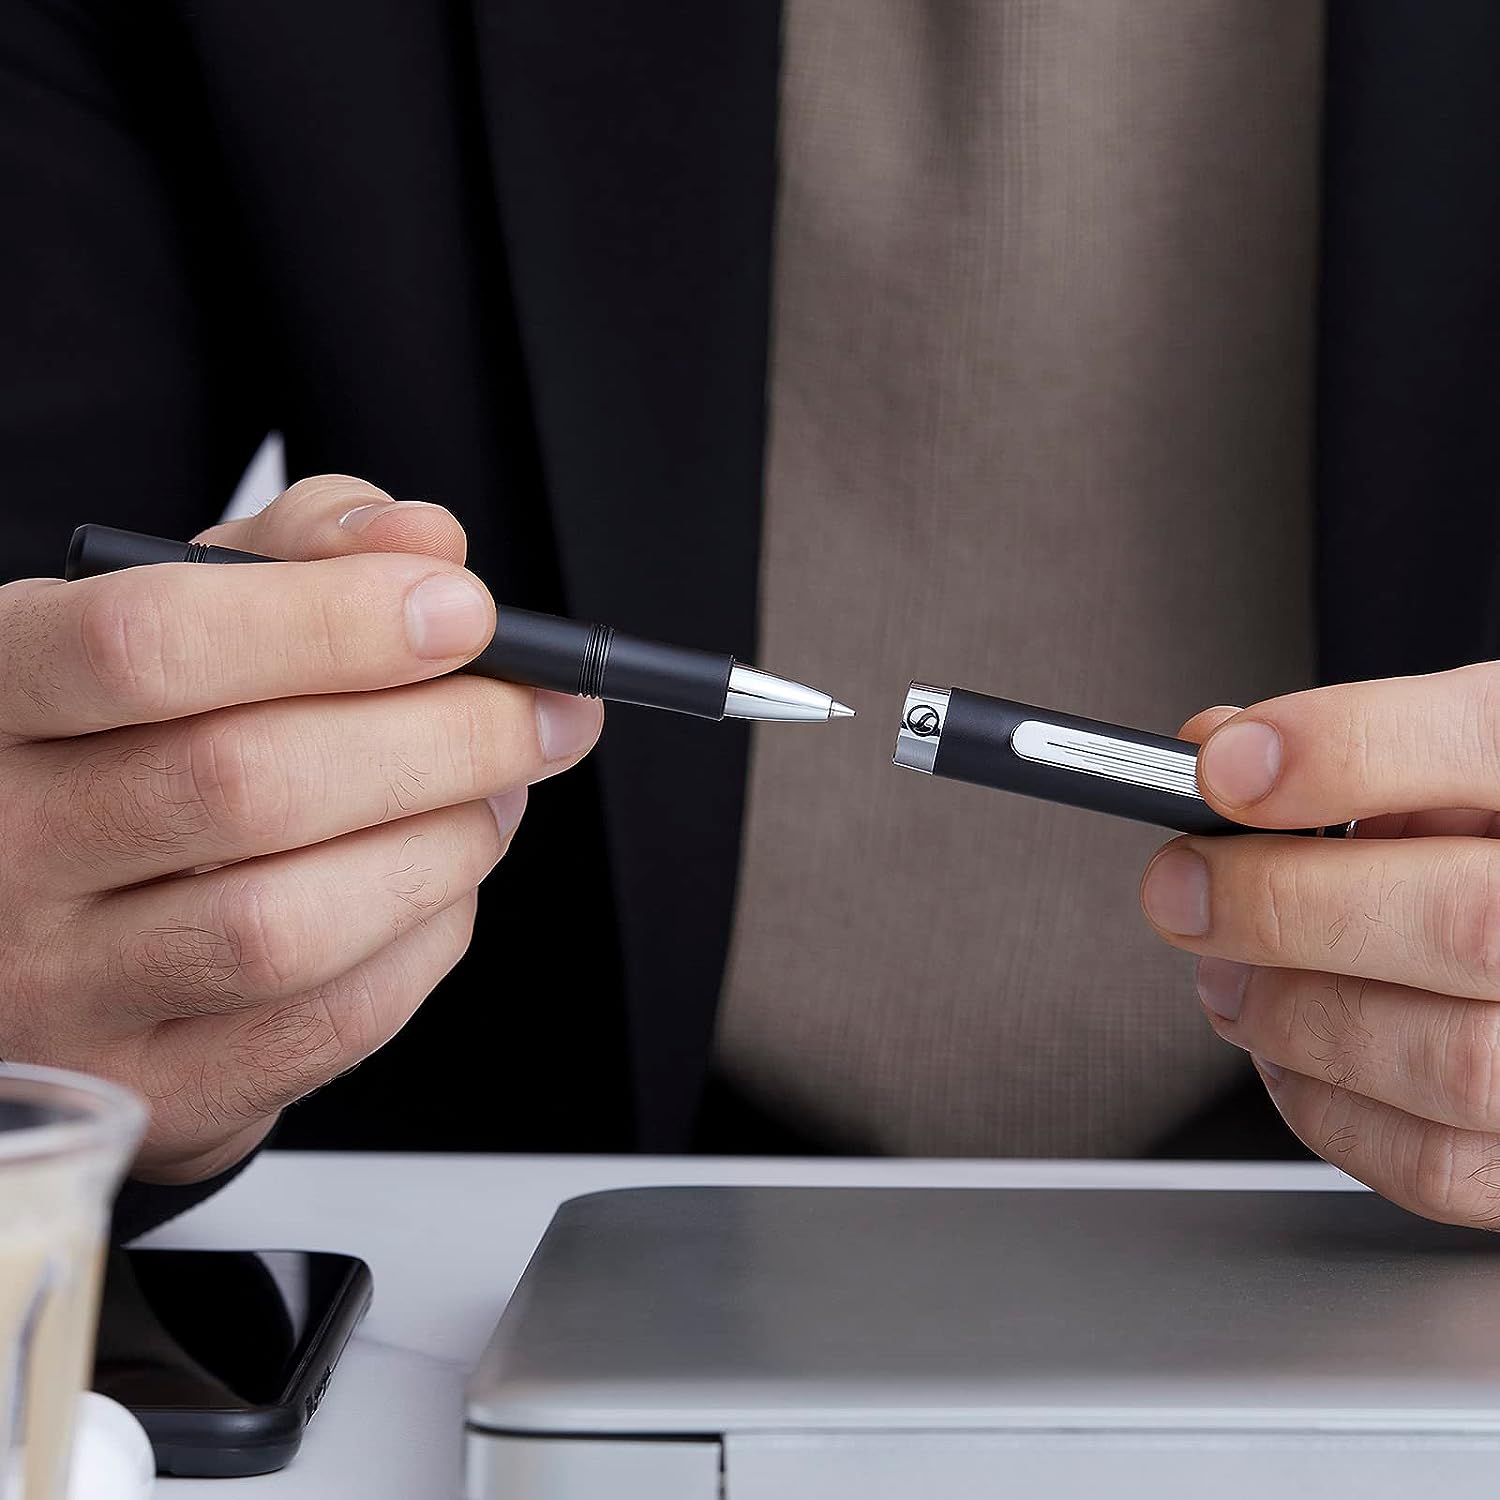 Scriveiner EDC Black Rollerball Luxury Pen, Stunning Pocket Pen with Chrome Finish